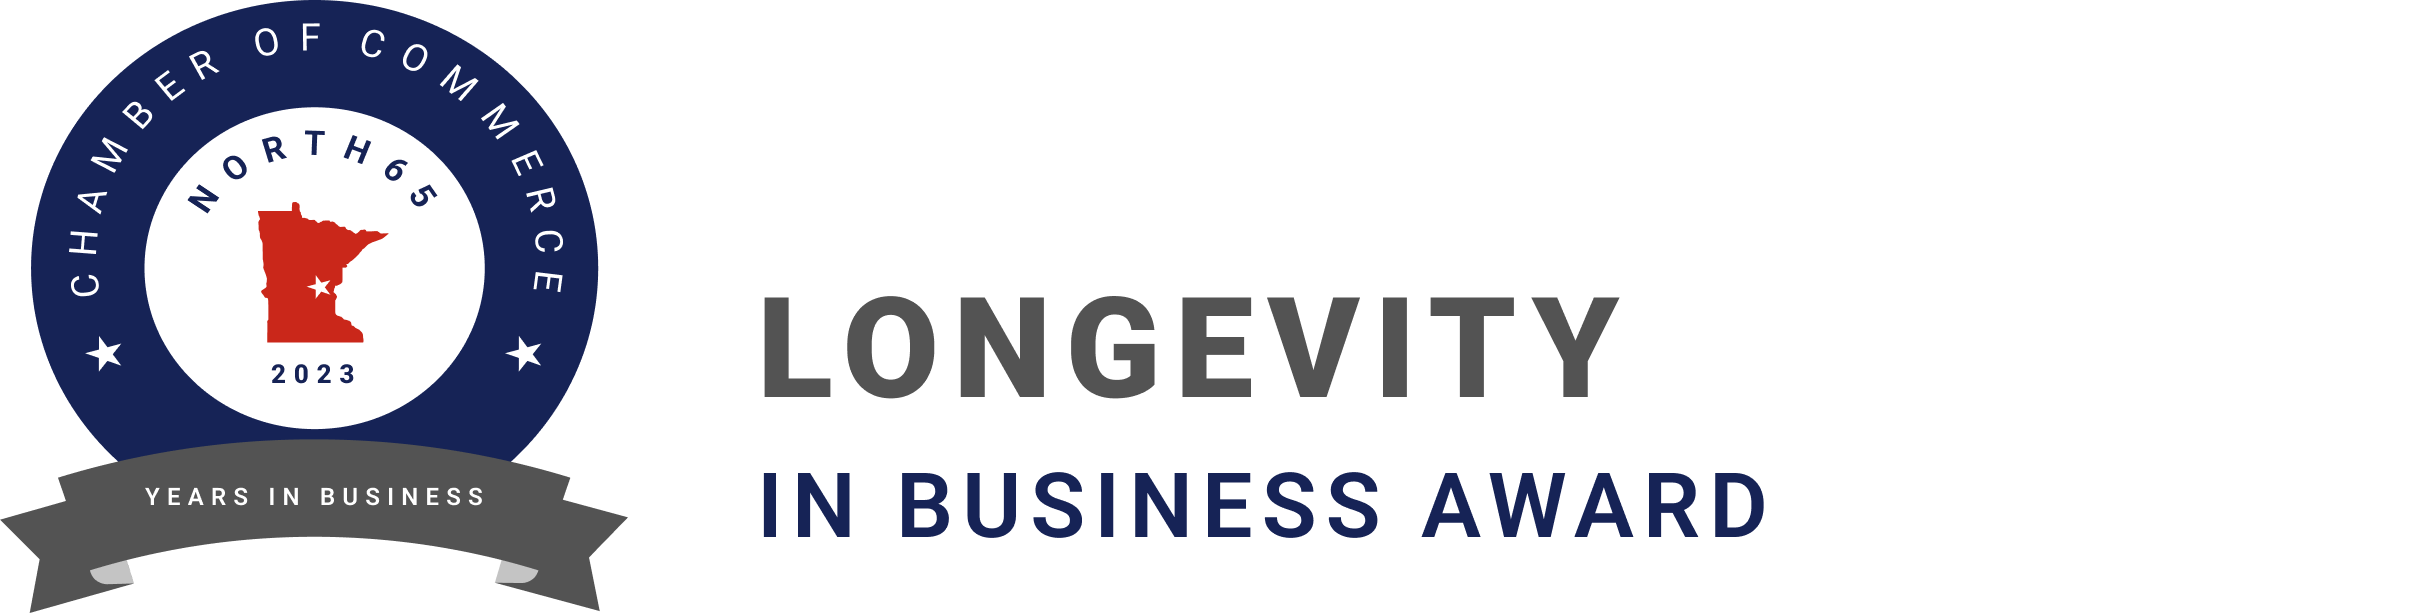 Longevity In Business Award 2023 Header Group PNG